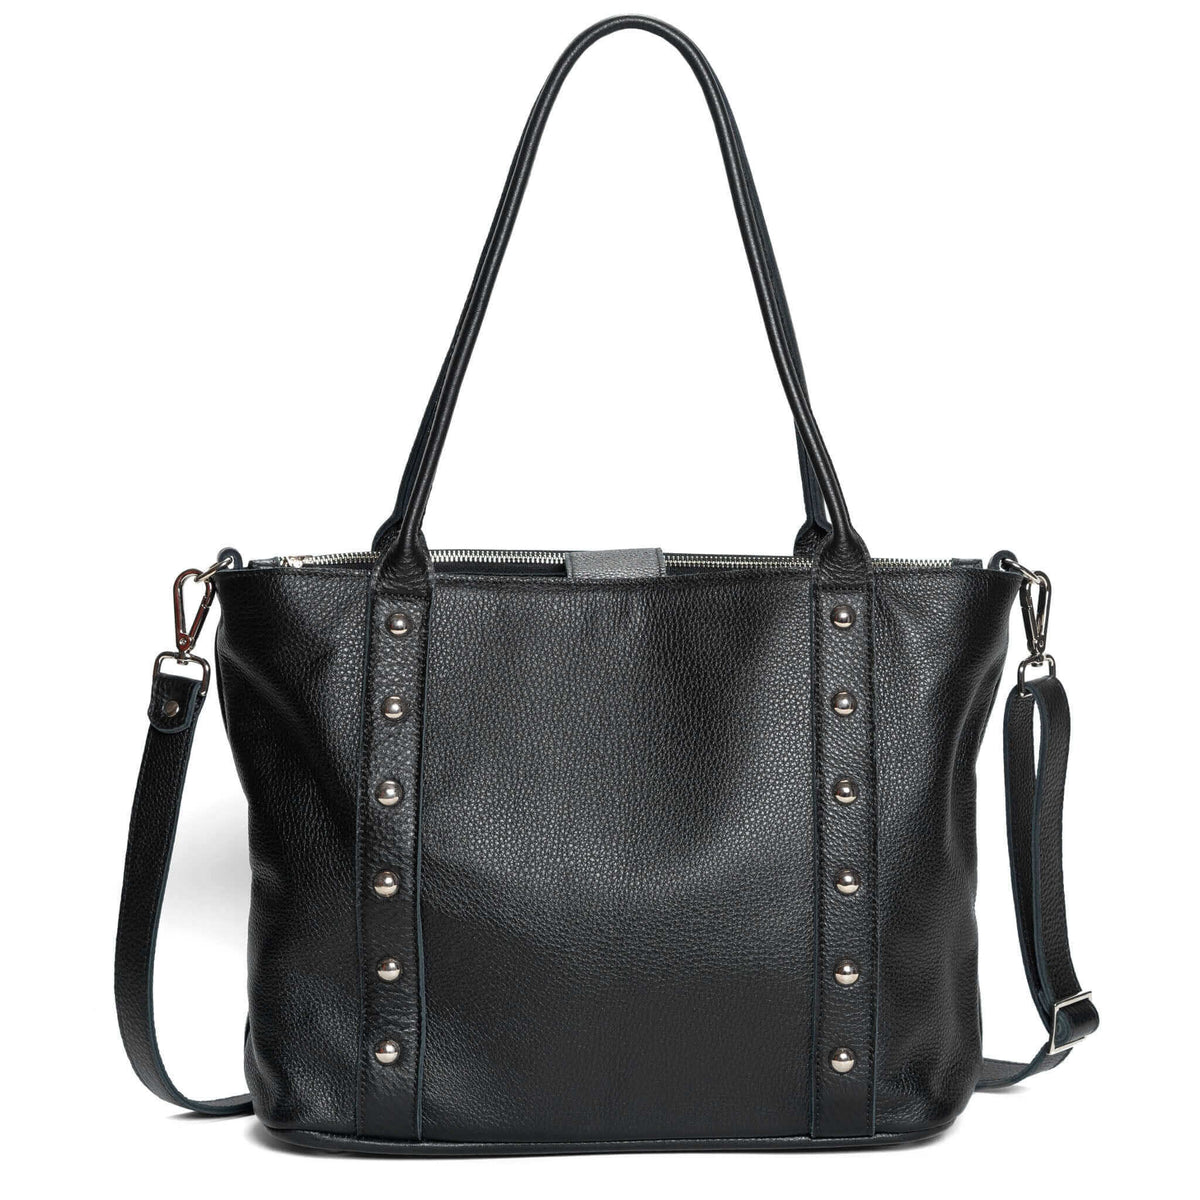 The perfect leather tote bag, black Noche, Brynn Capella, made in the usa